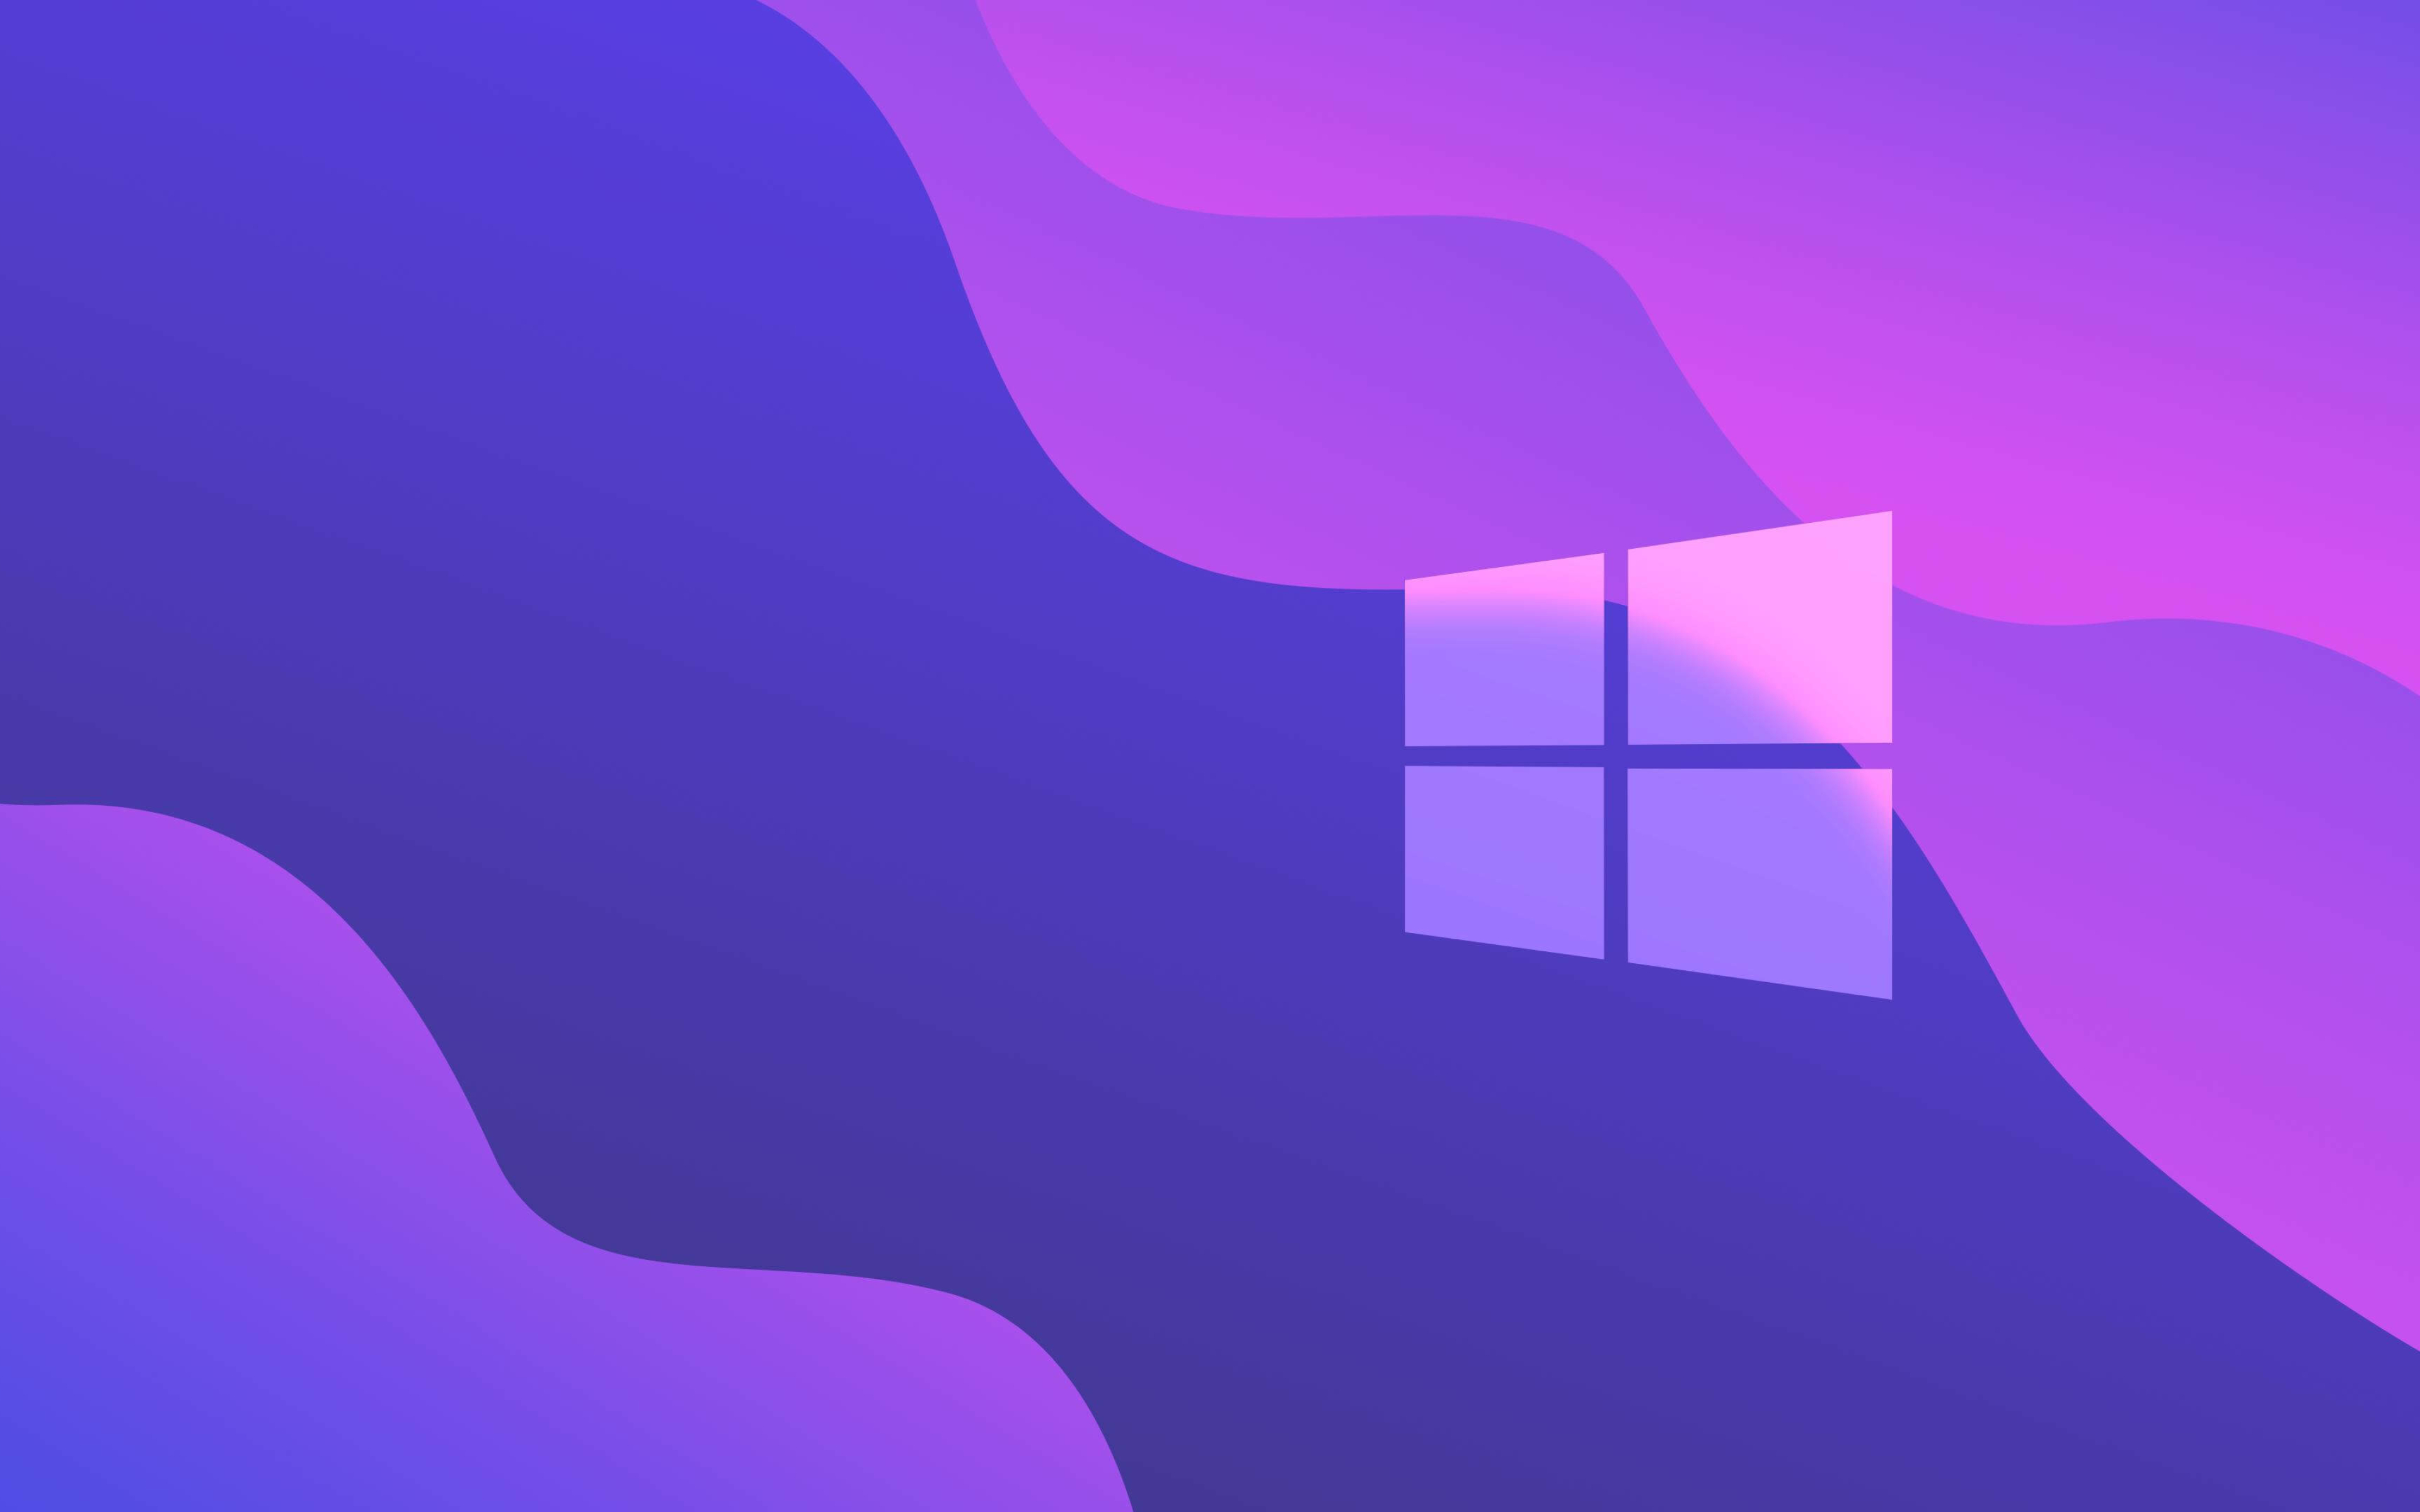 Windows 10 Wallpaper Color